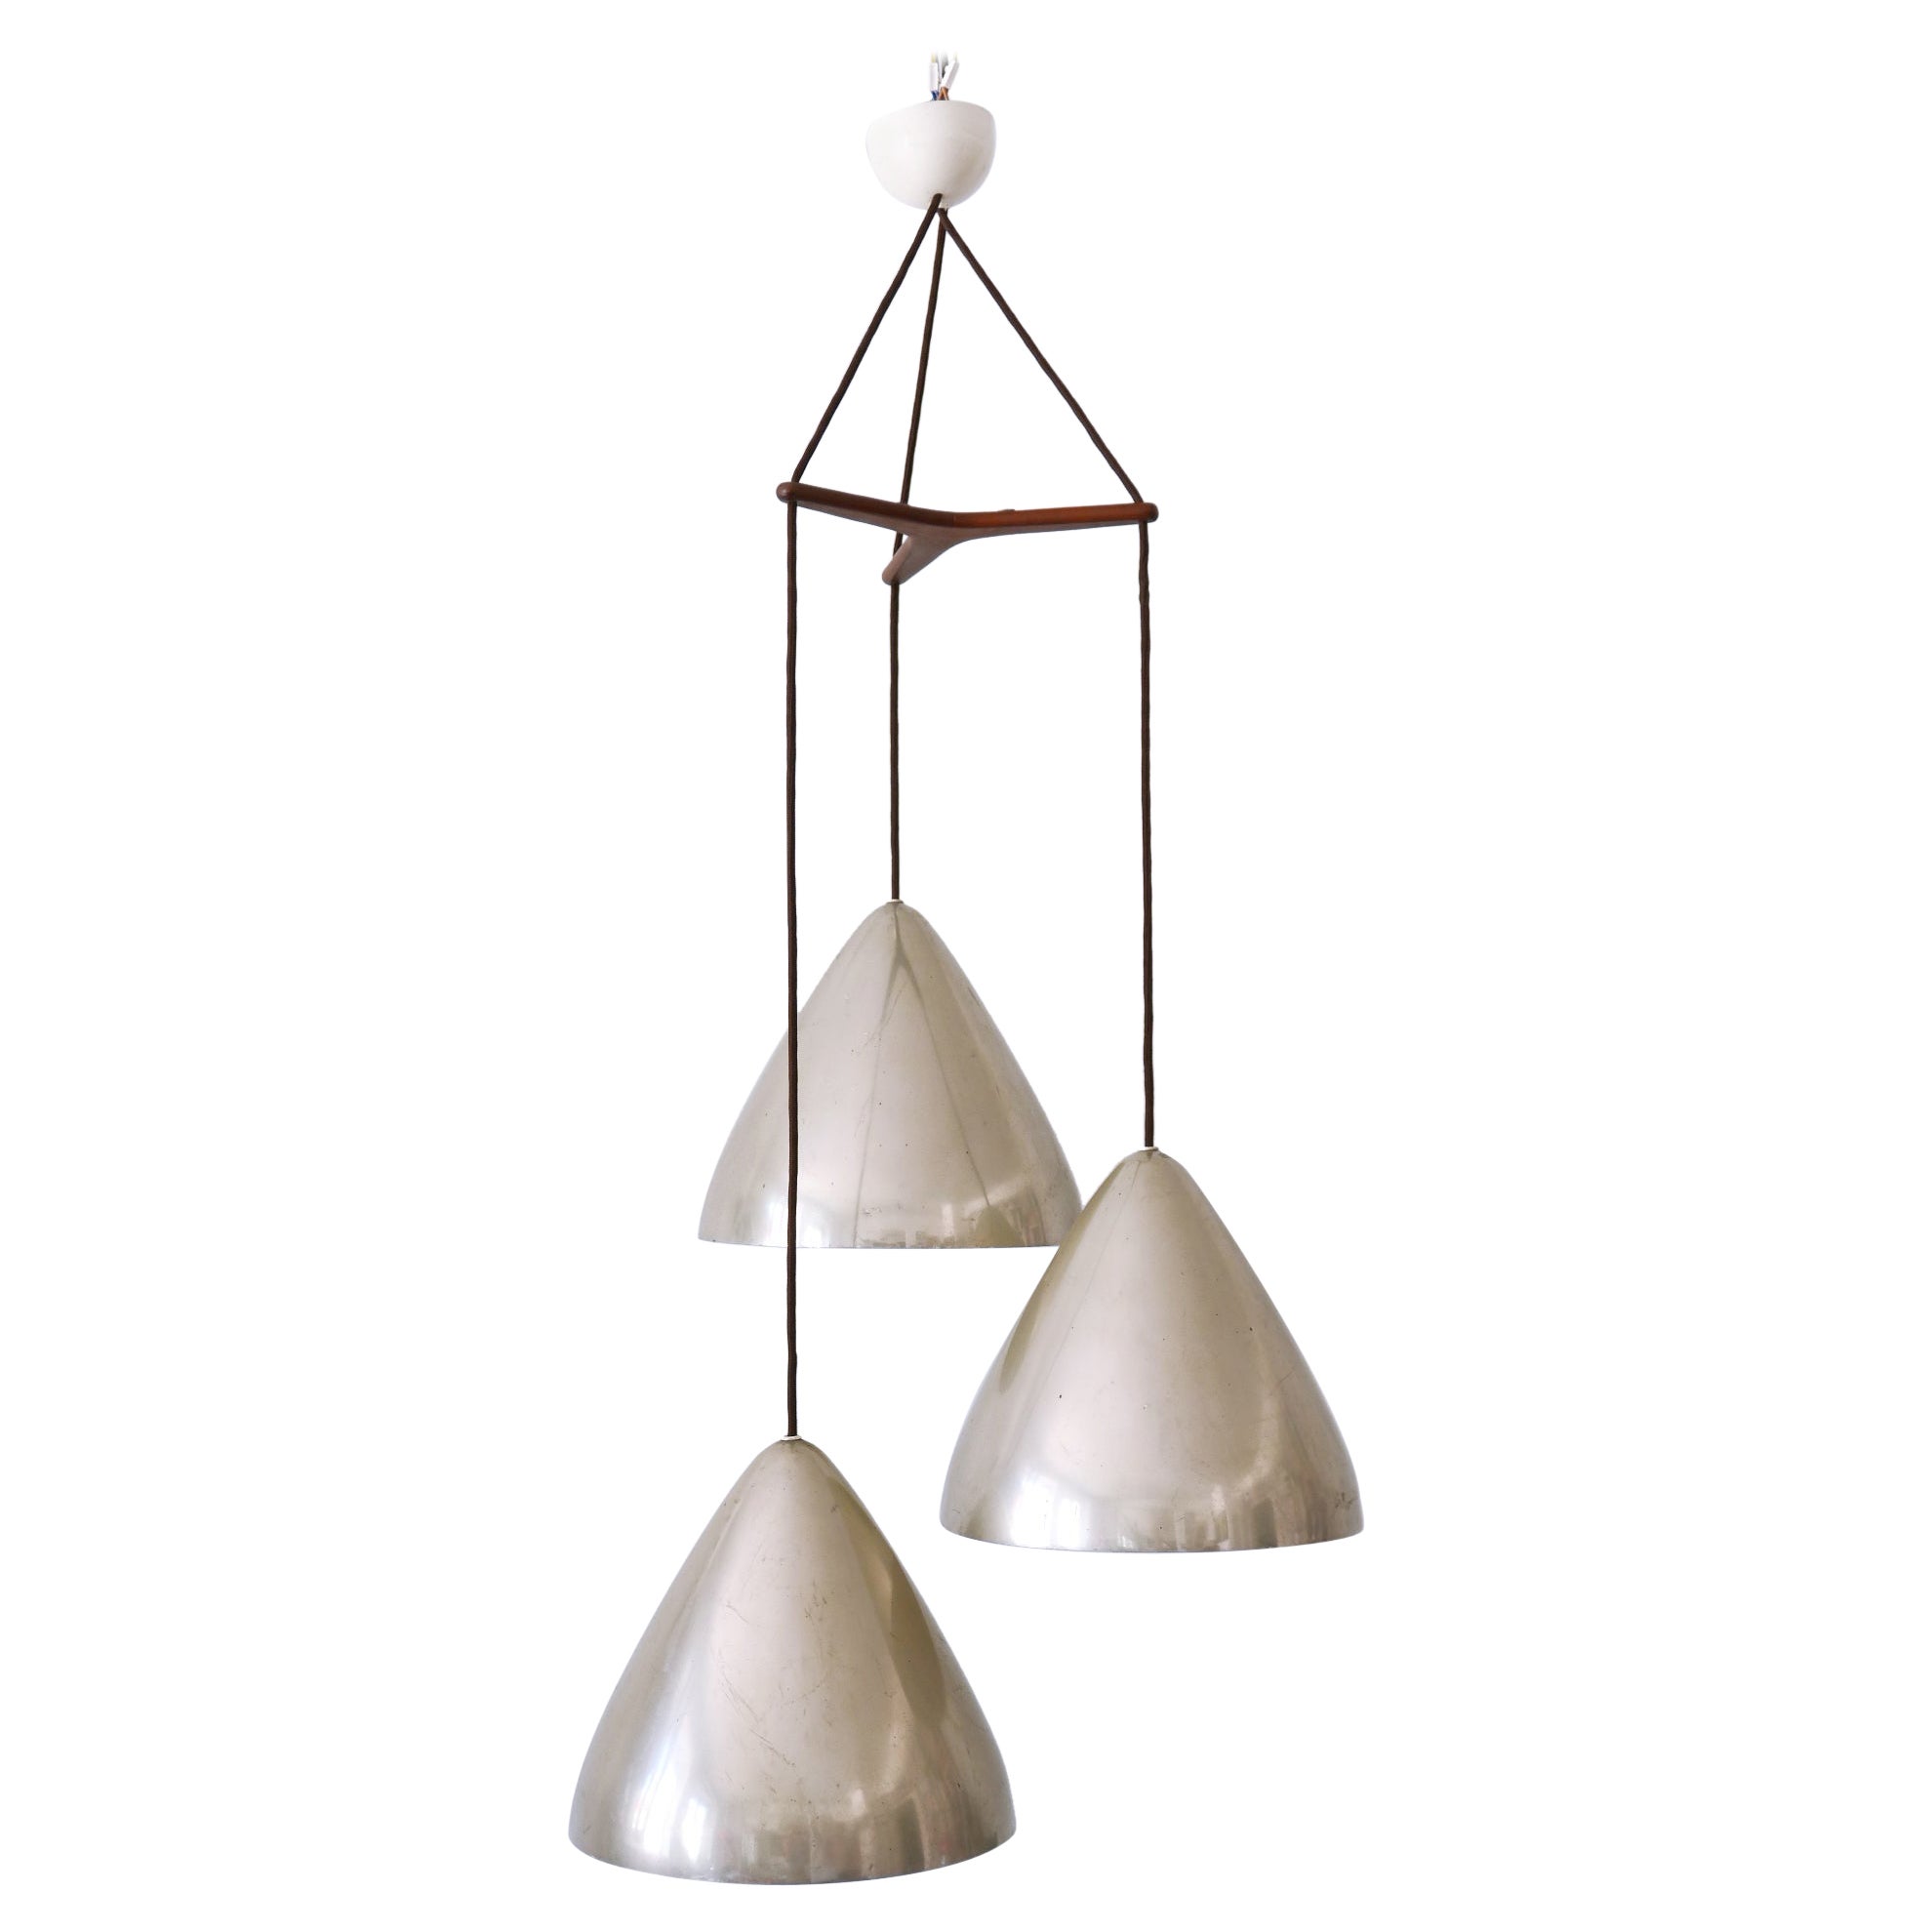 Elegant Cascading Pendant Lamp by Lisa Johansson-Pape for Orno Finland 1960s